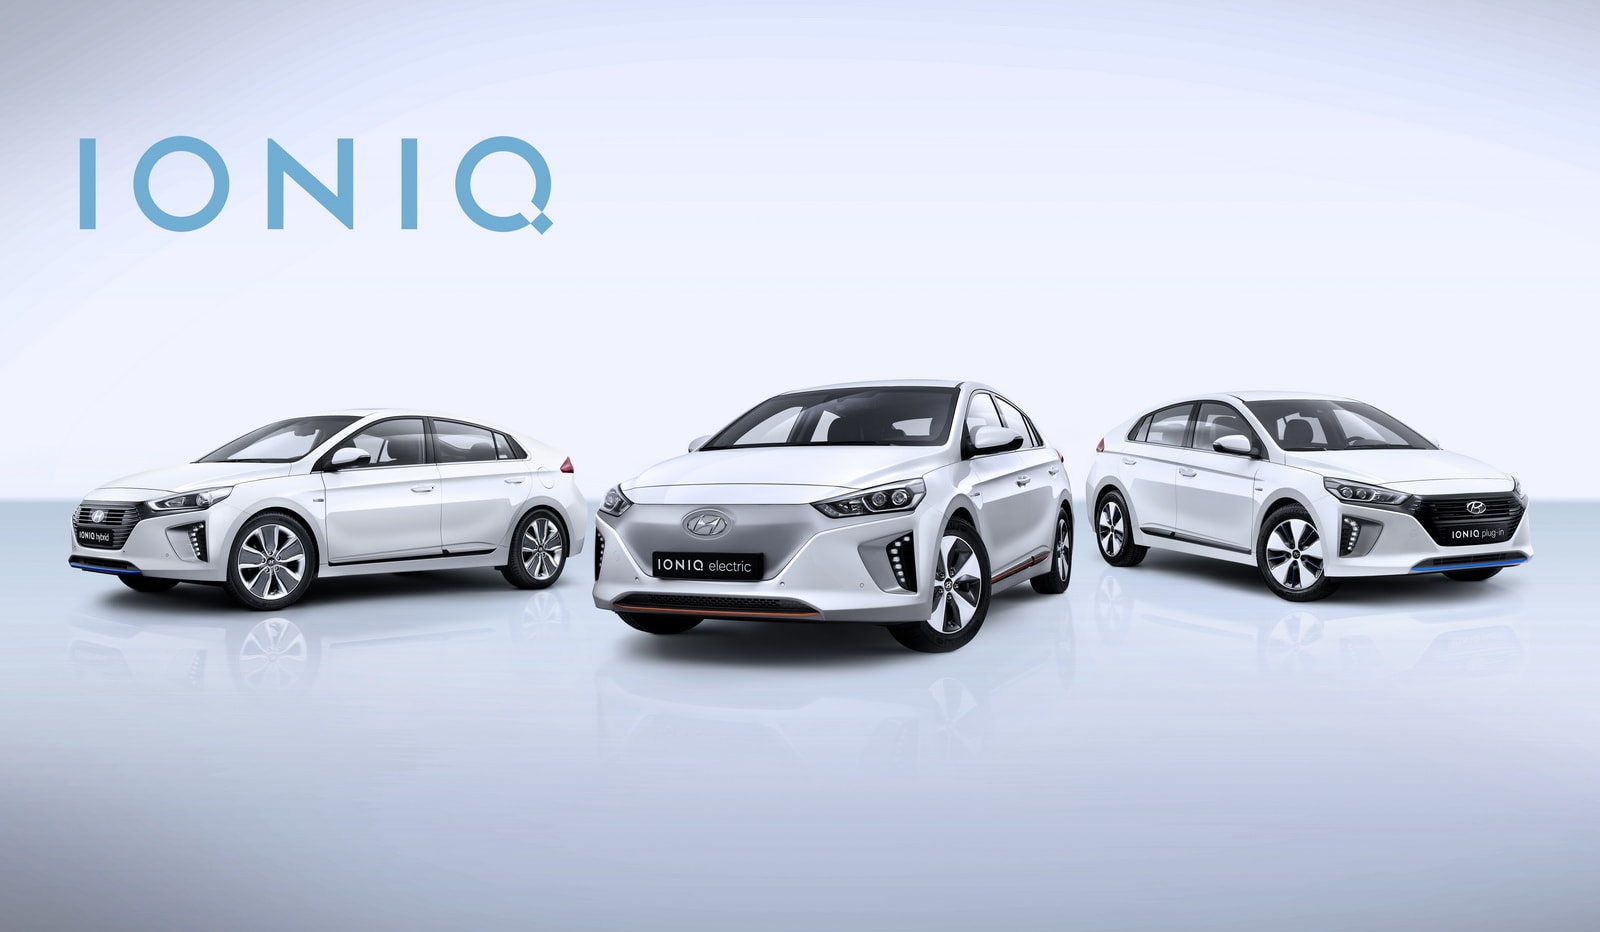 2017 Hyundai Ioniq Electric Revealed in Korea, Boasts 28 kWh Battery -